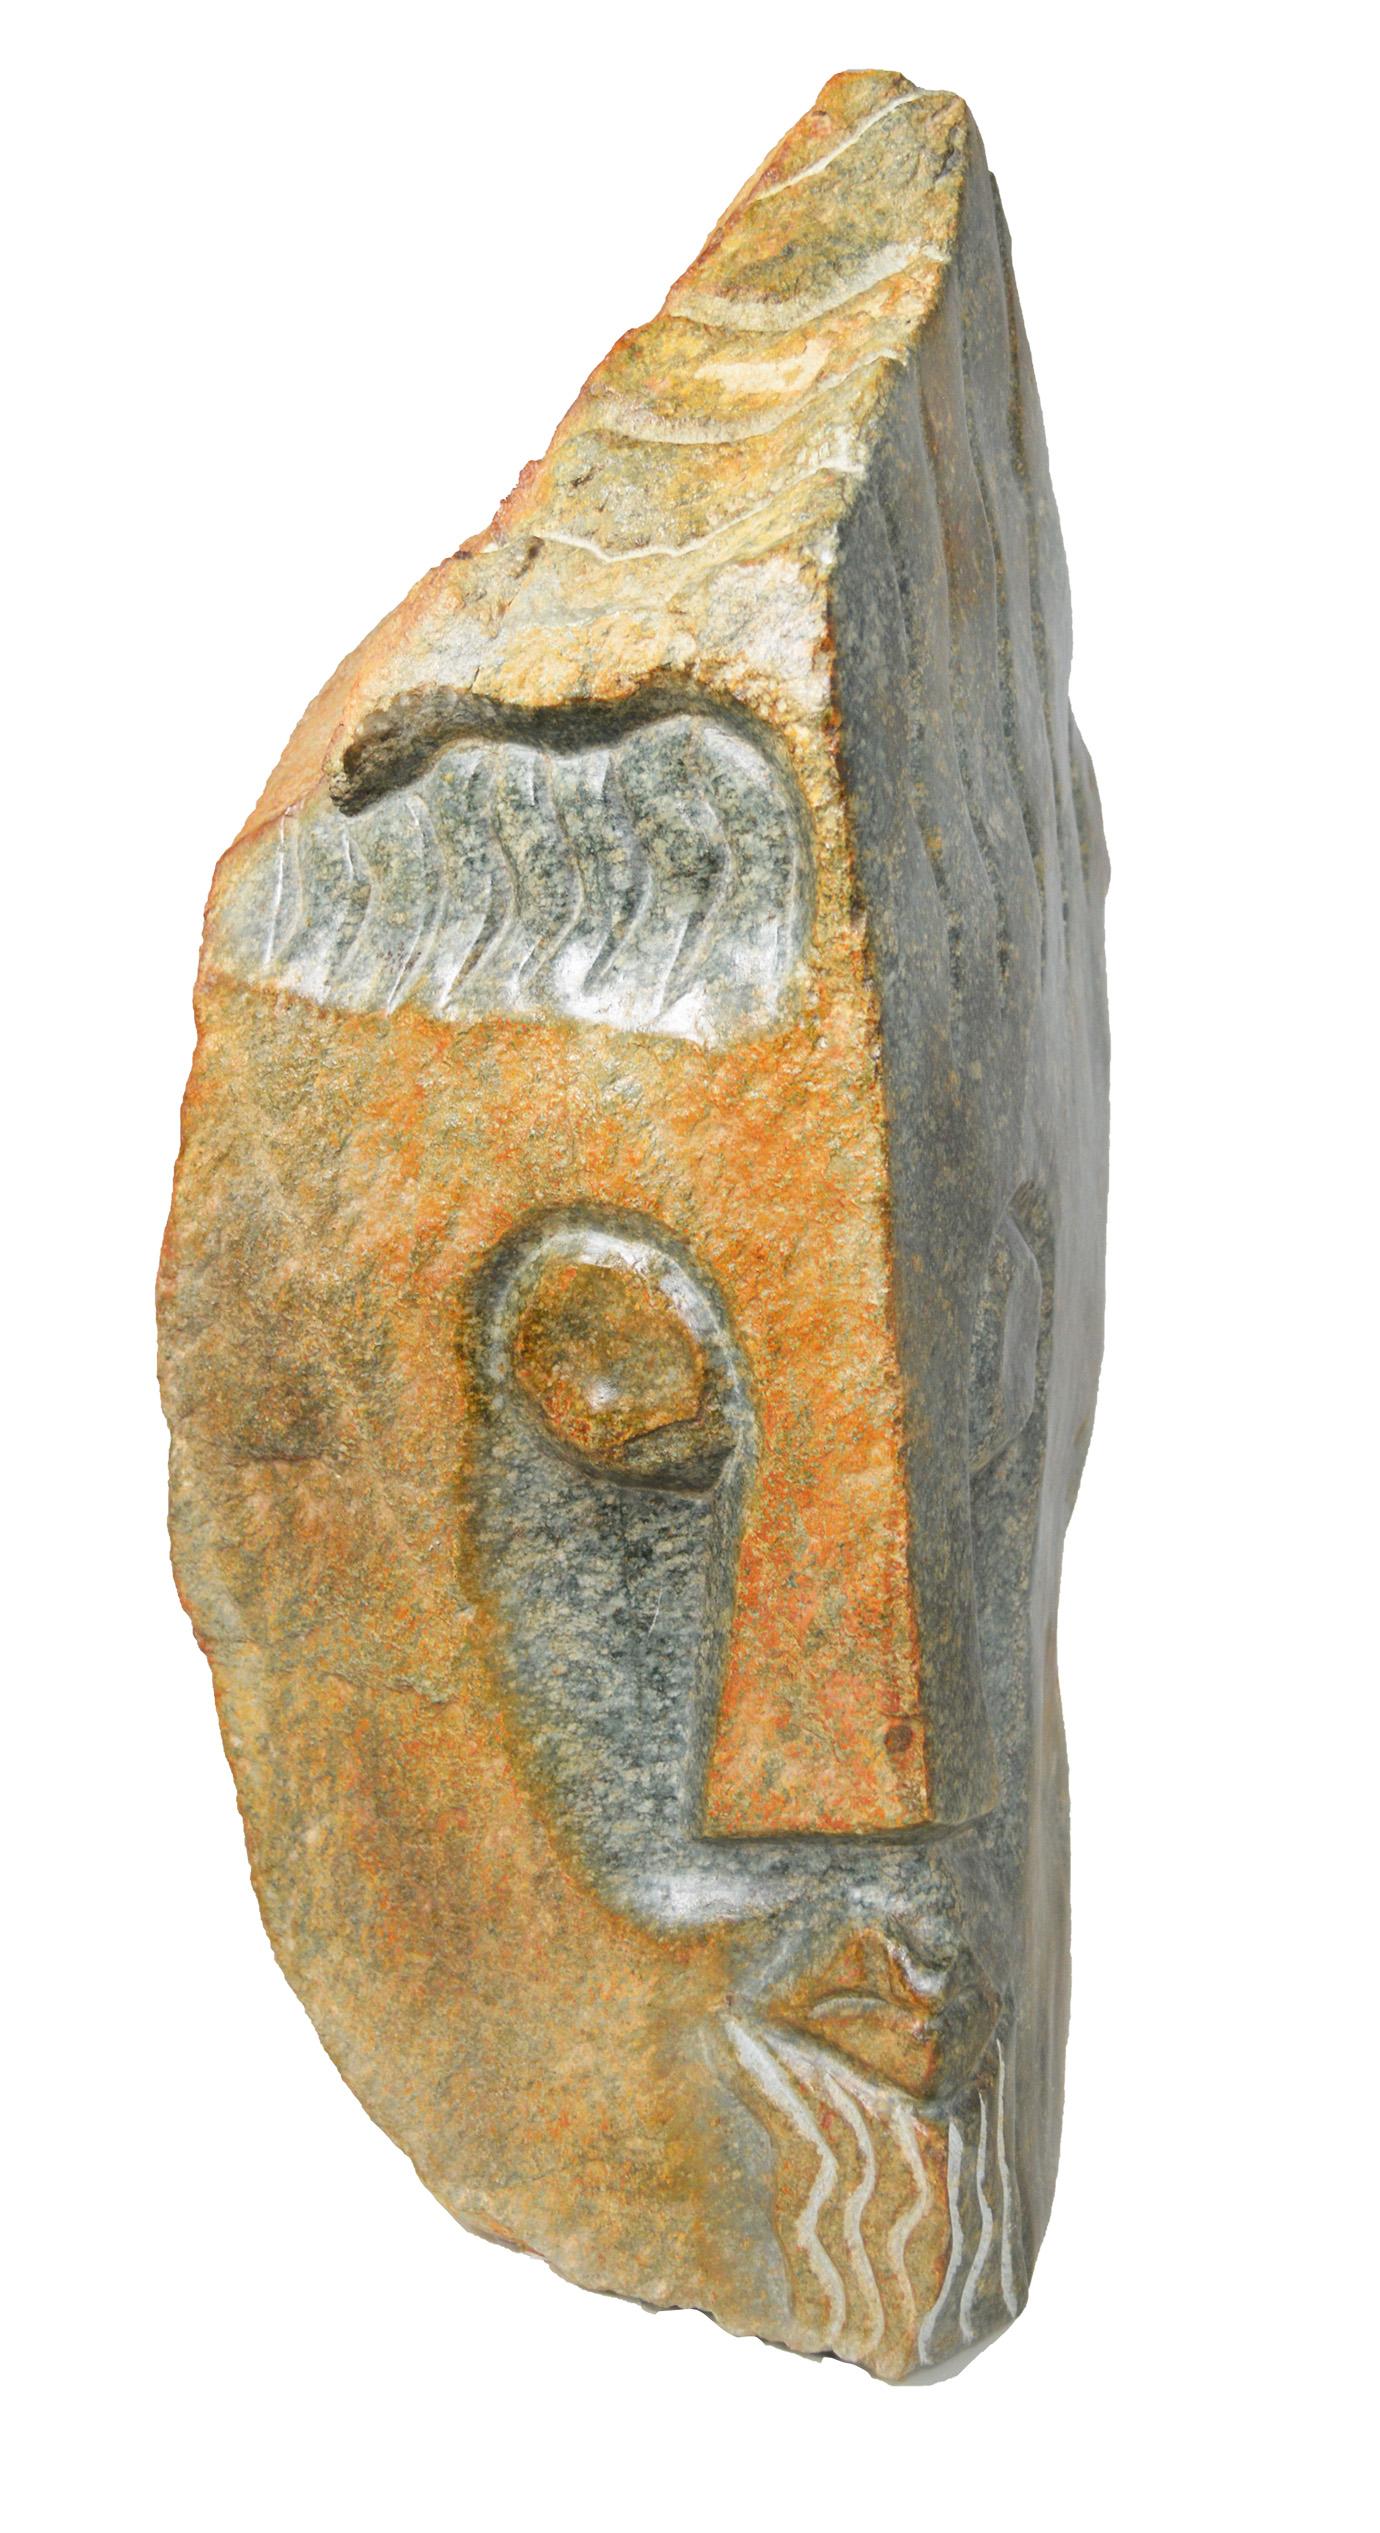 'Notorious Leader' original stone sculpture by Shona artist Nigel James For Sale 1